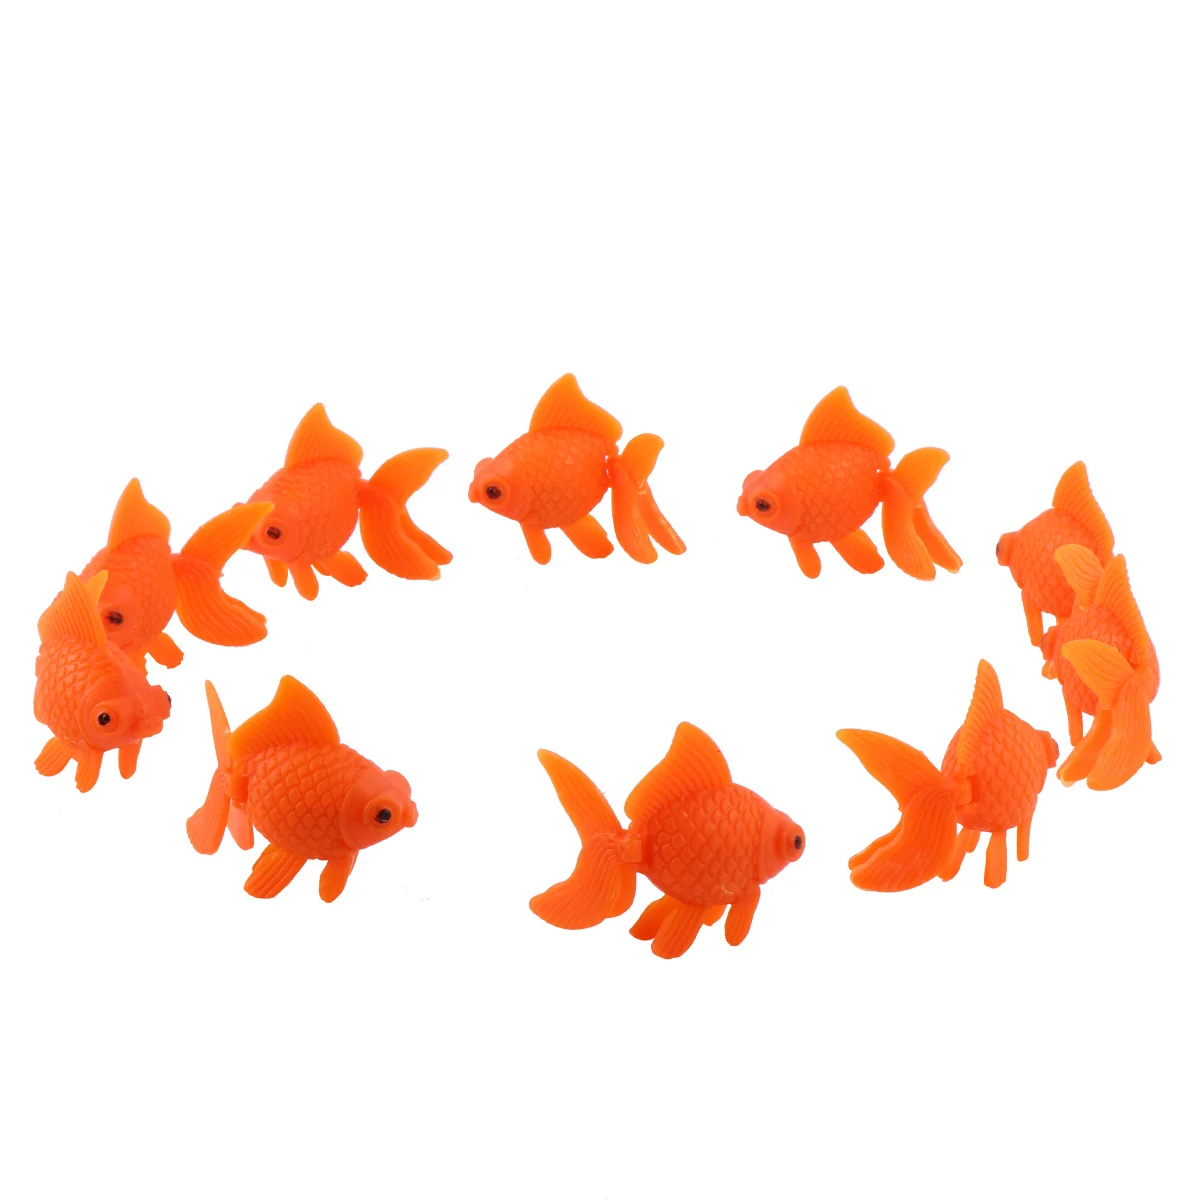 

10 Artificial Goldfish Realistic Floating Tropical Figure for Tank Aquarium Decor Ornament